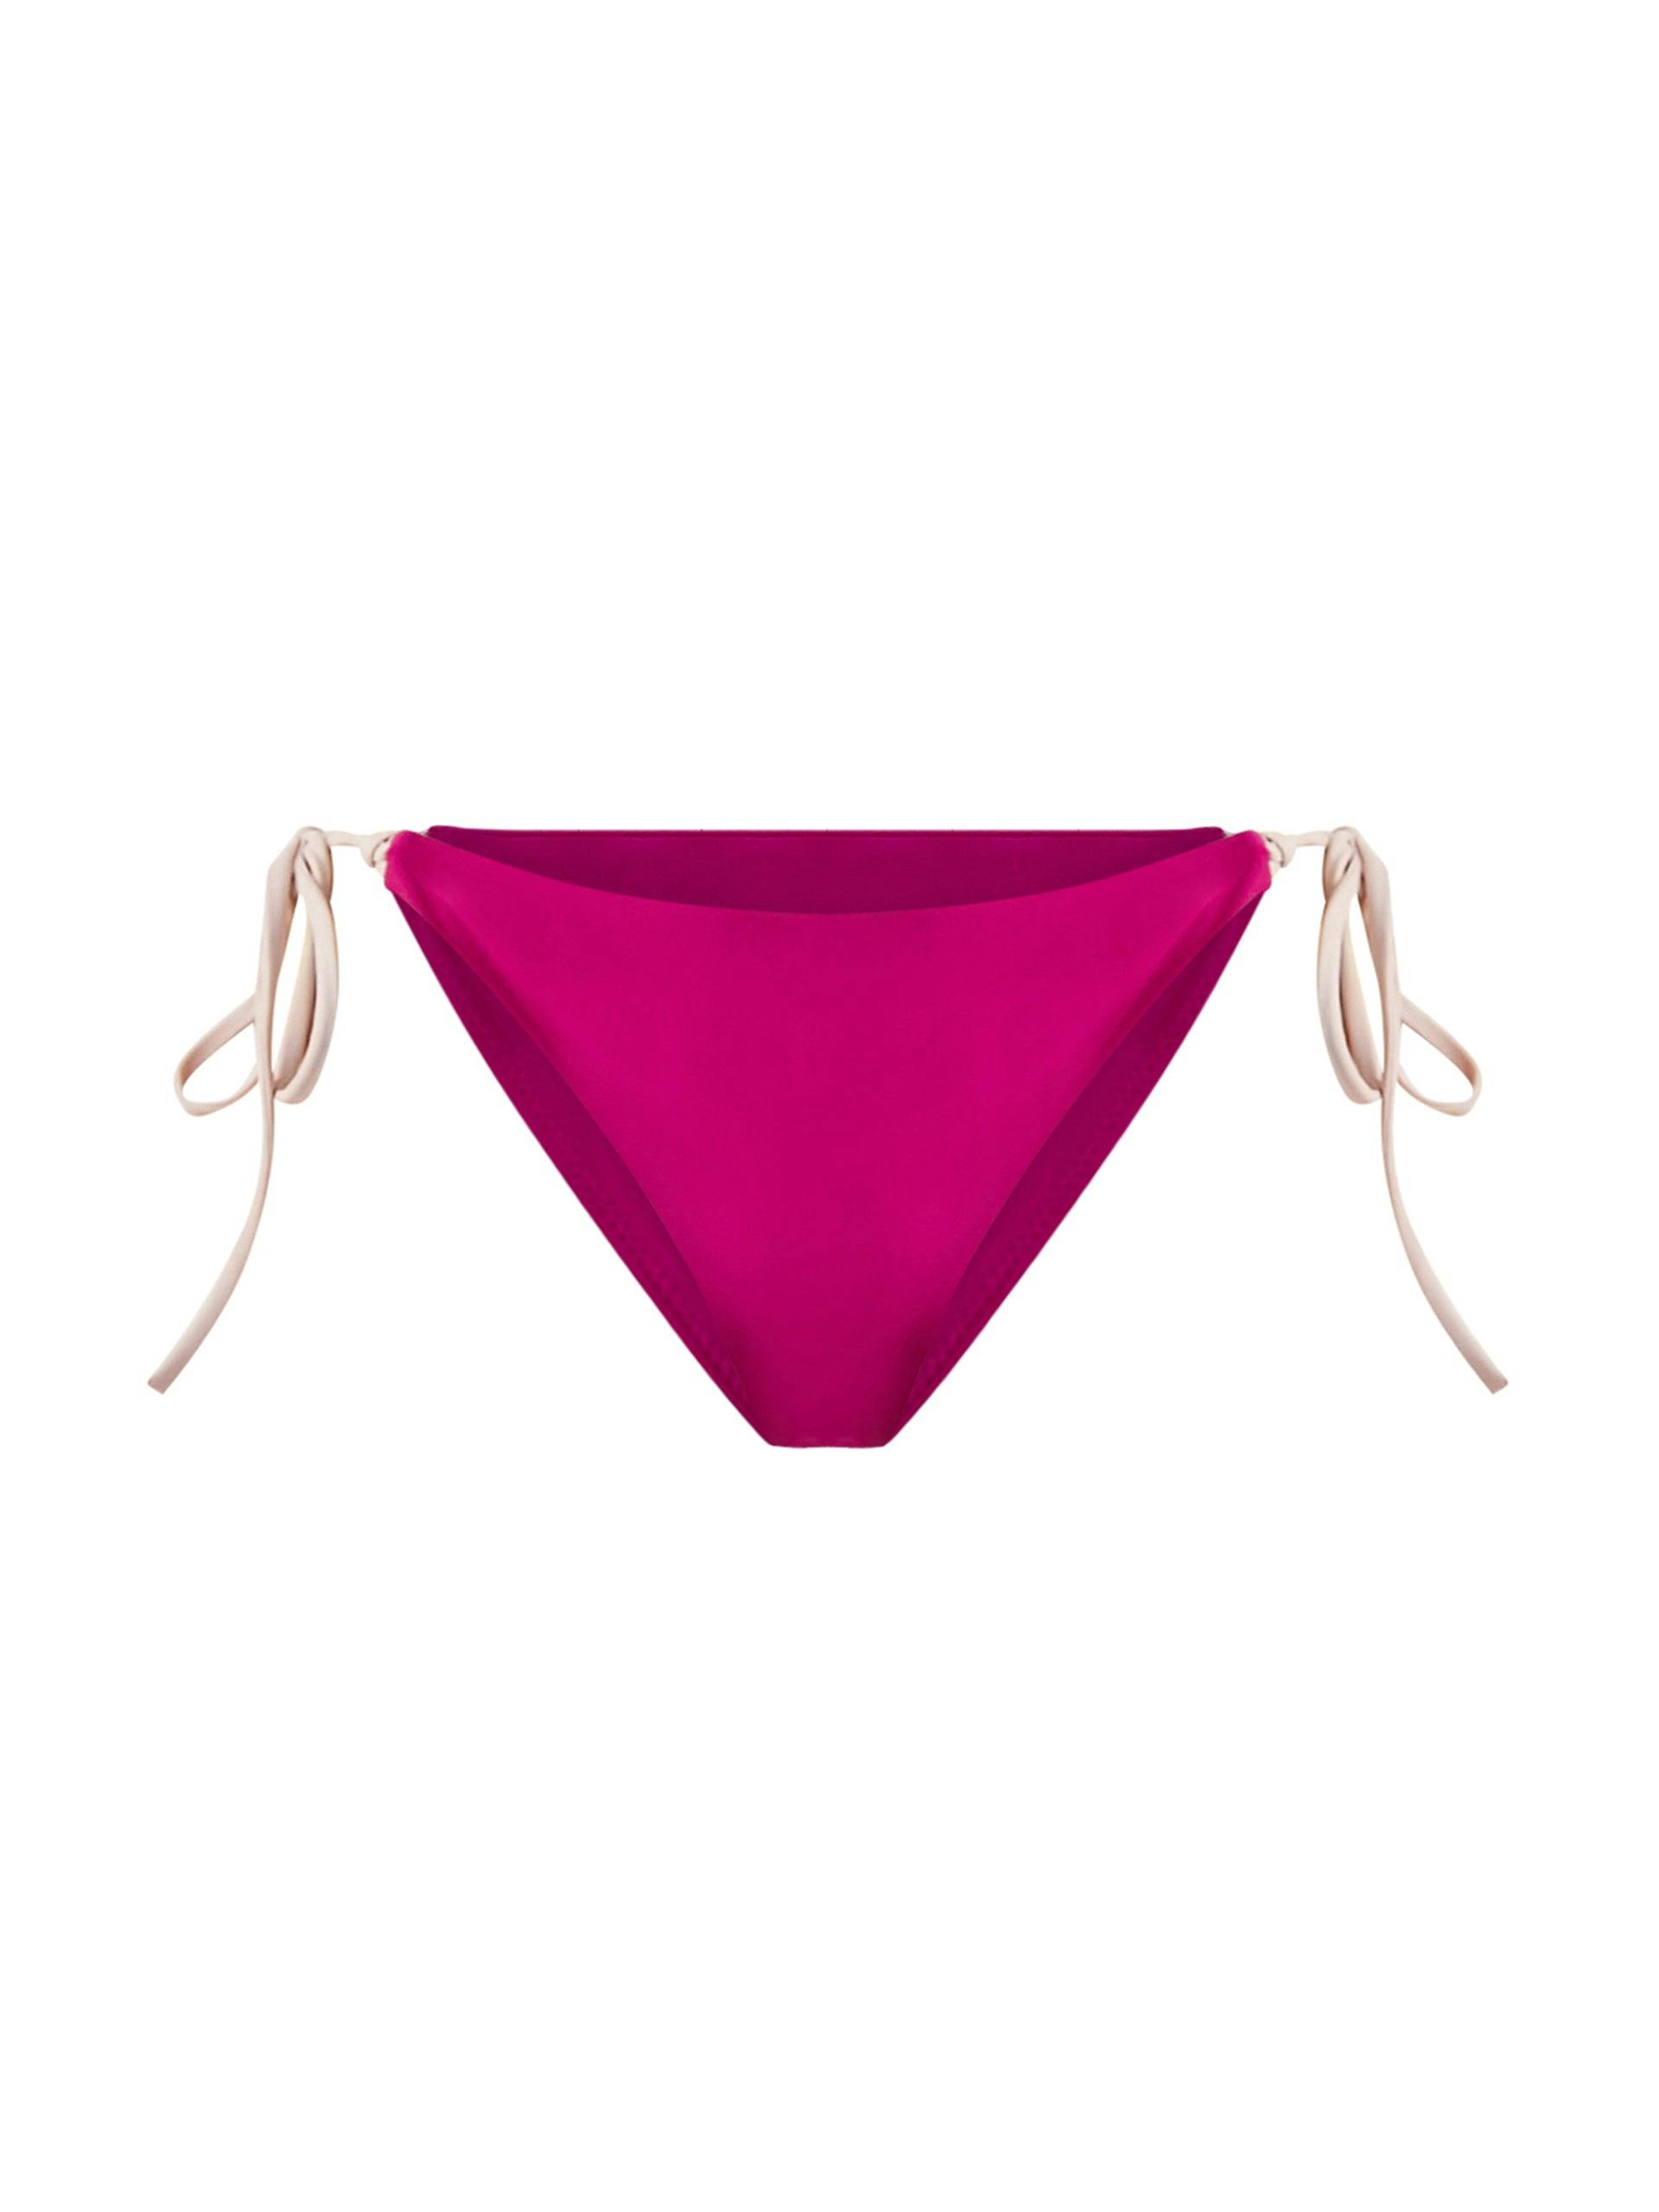 Dafne pink triangle bikini bottom